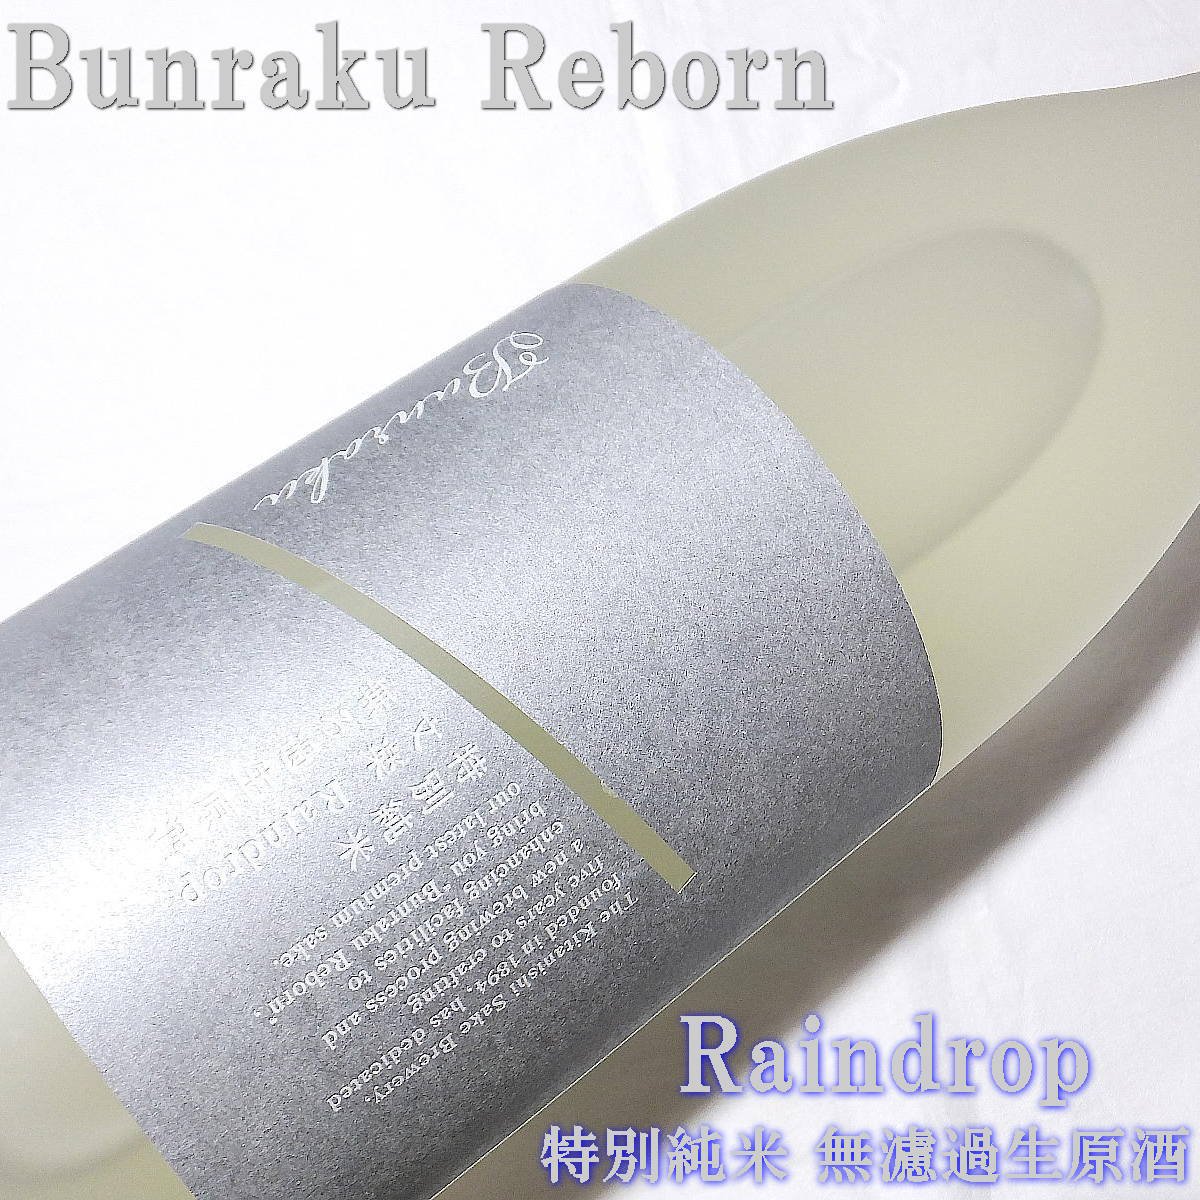 Bunraku Reborn Raindrop 特別純米 無濾過生原酒1